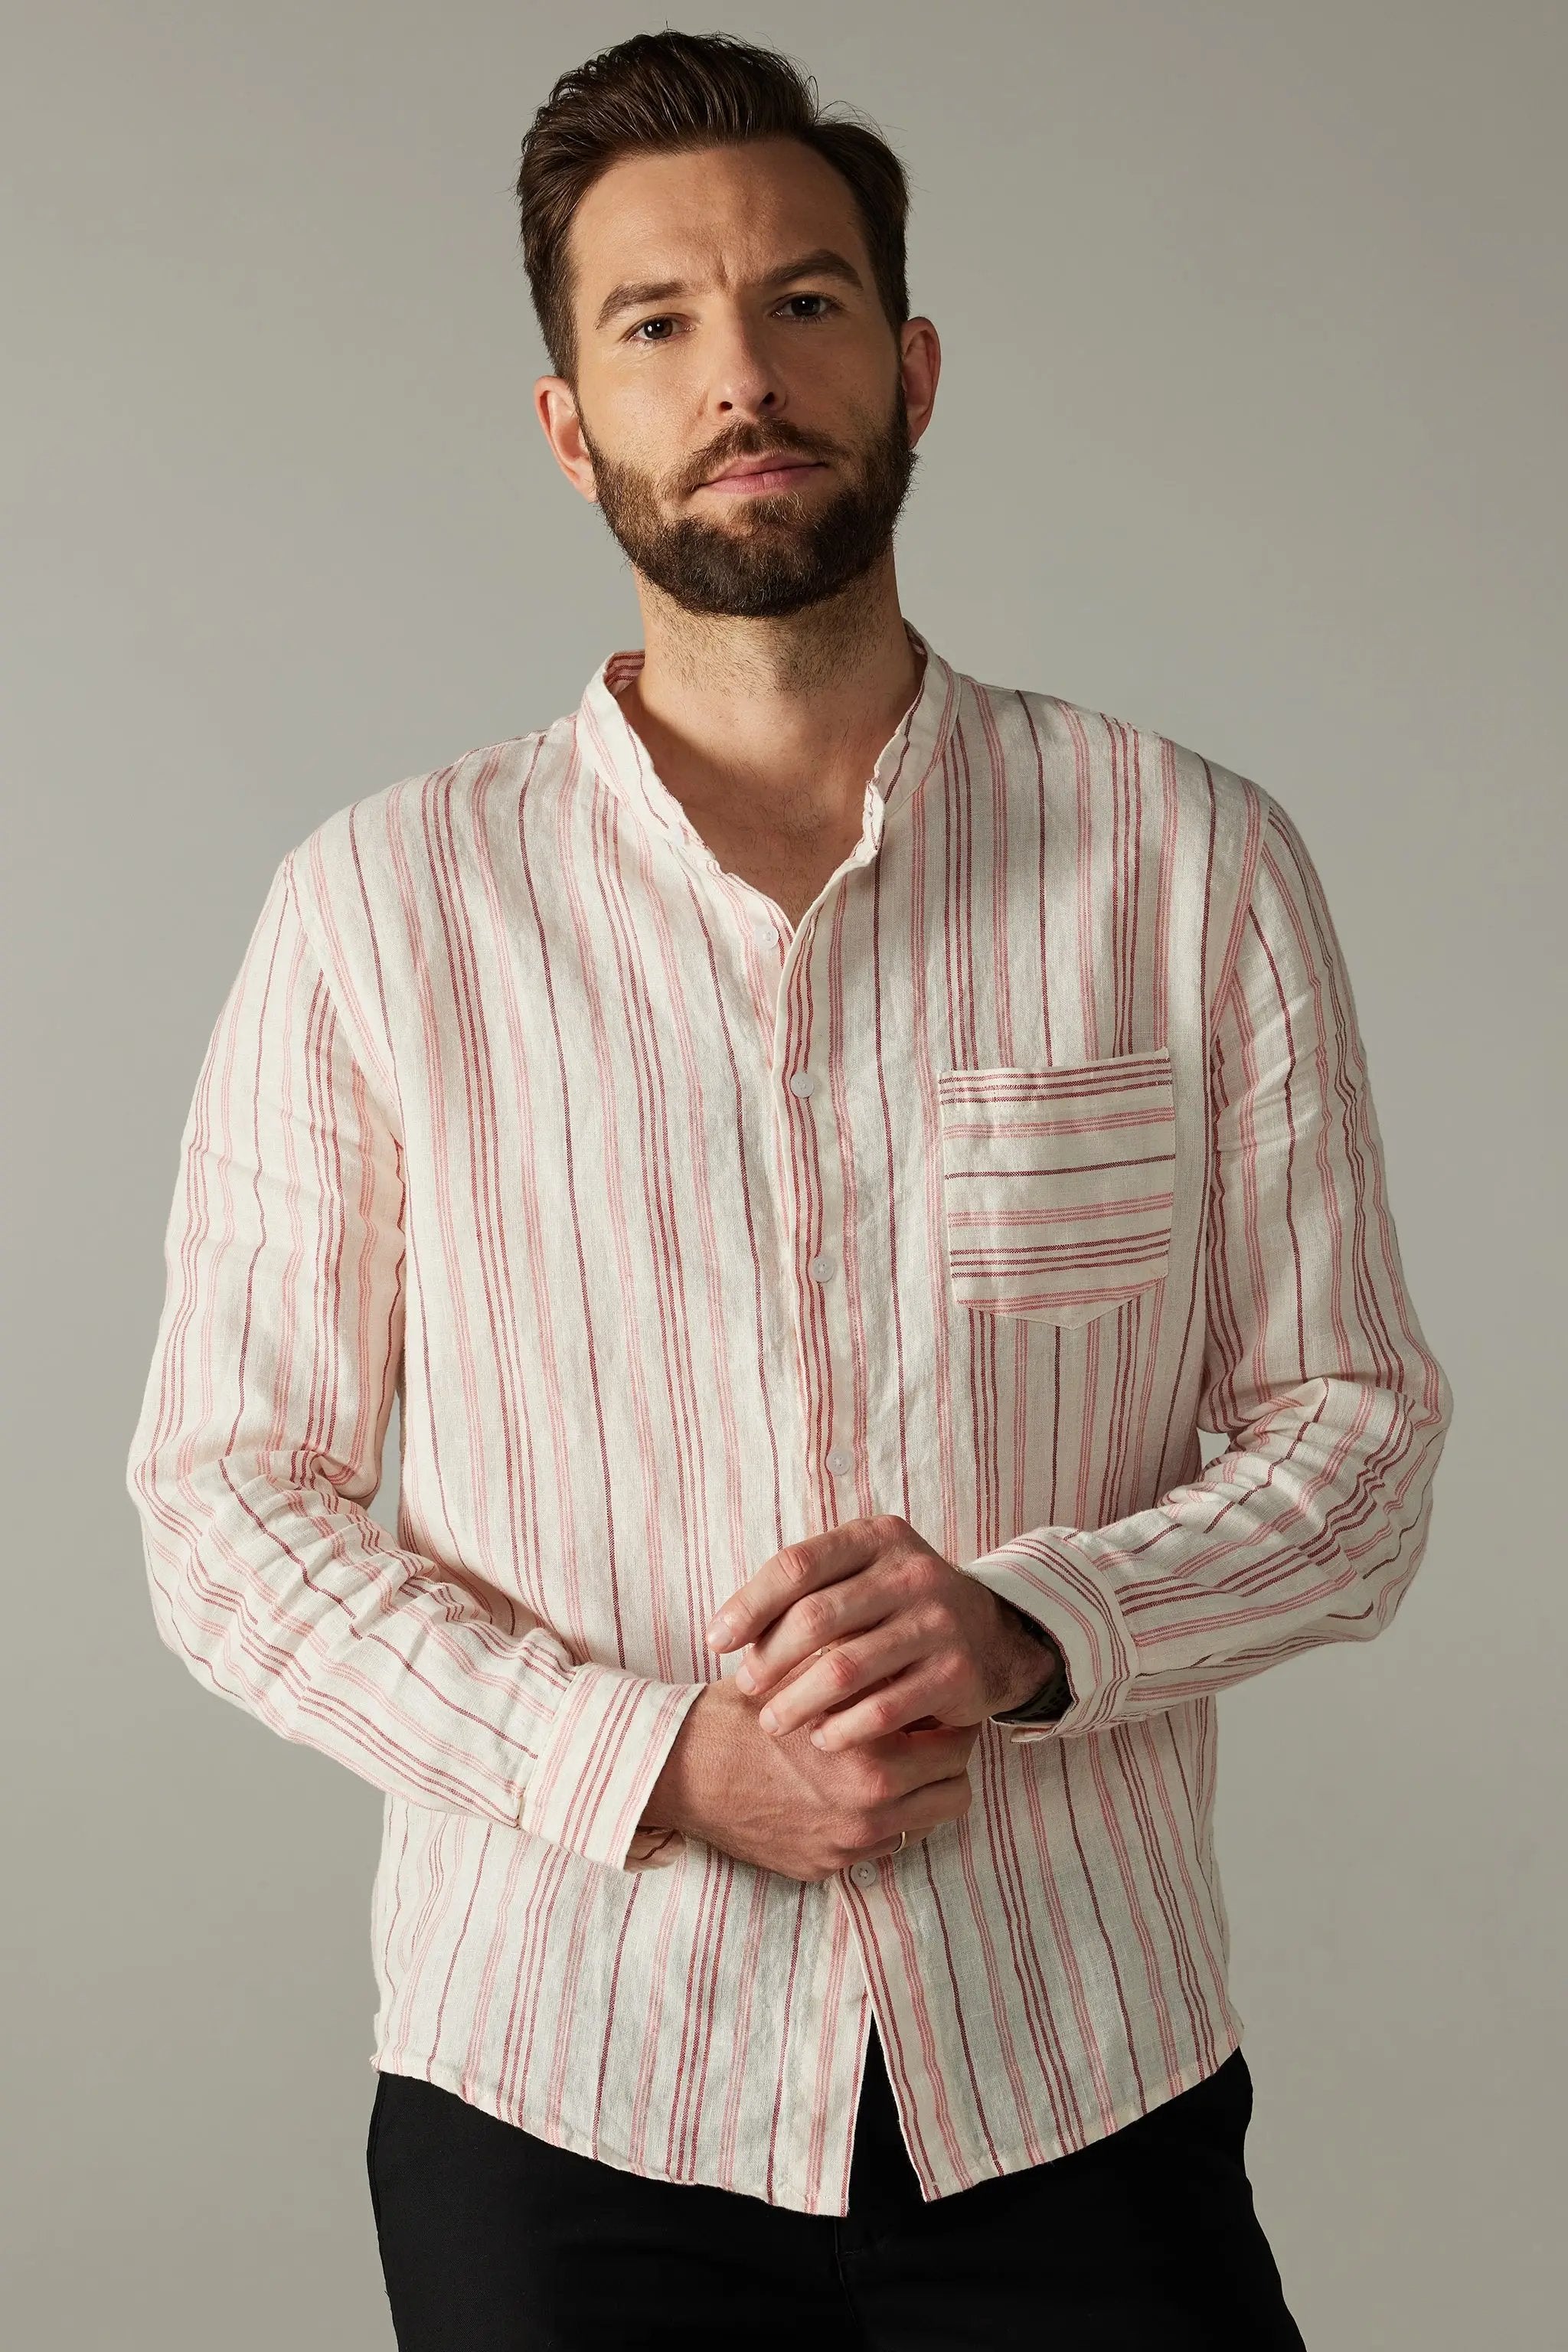 a man with a beard wearing a striped shirt